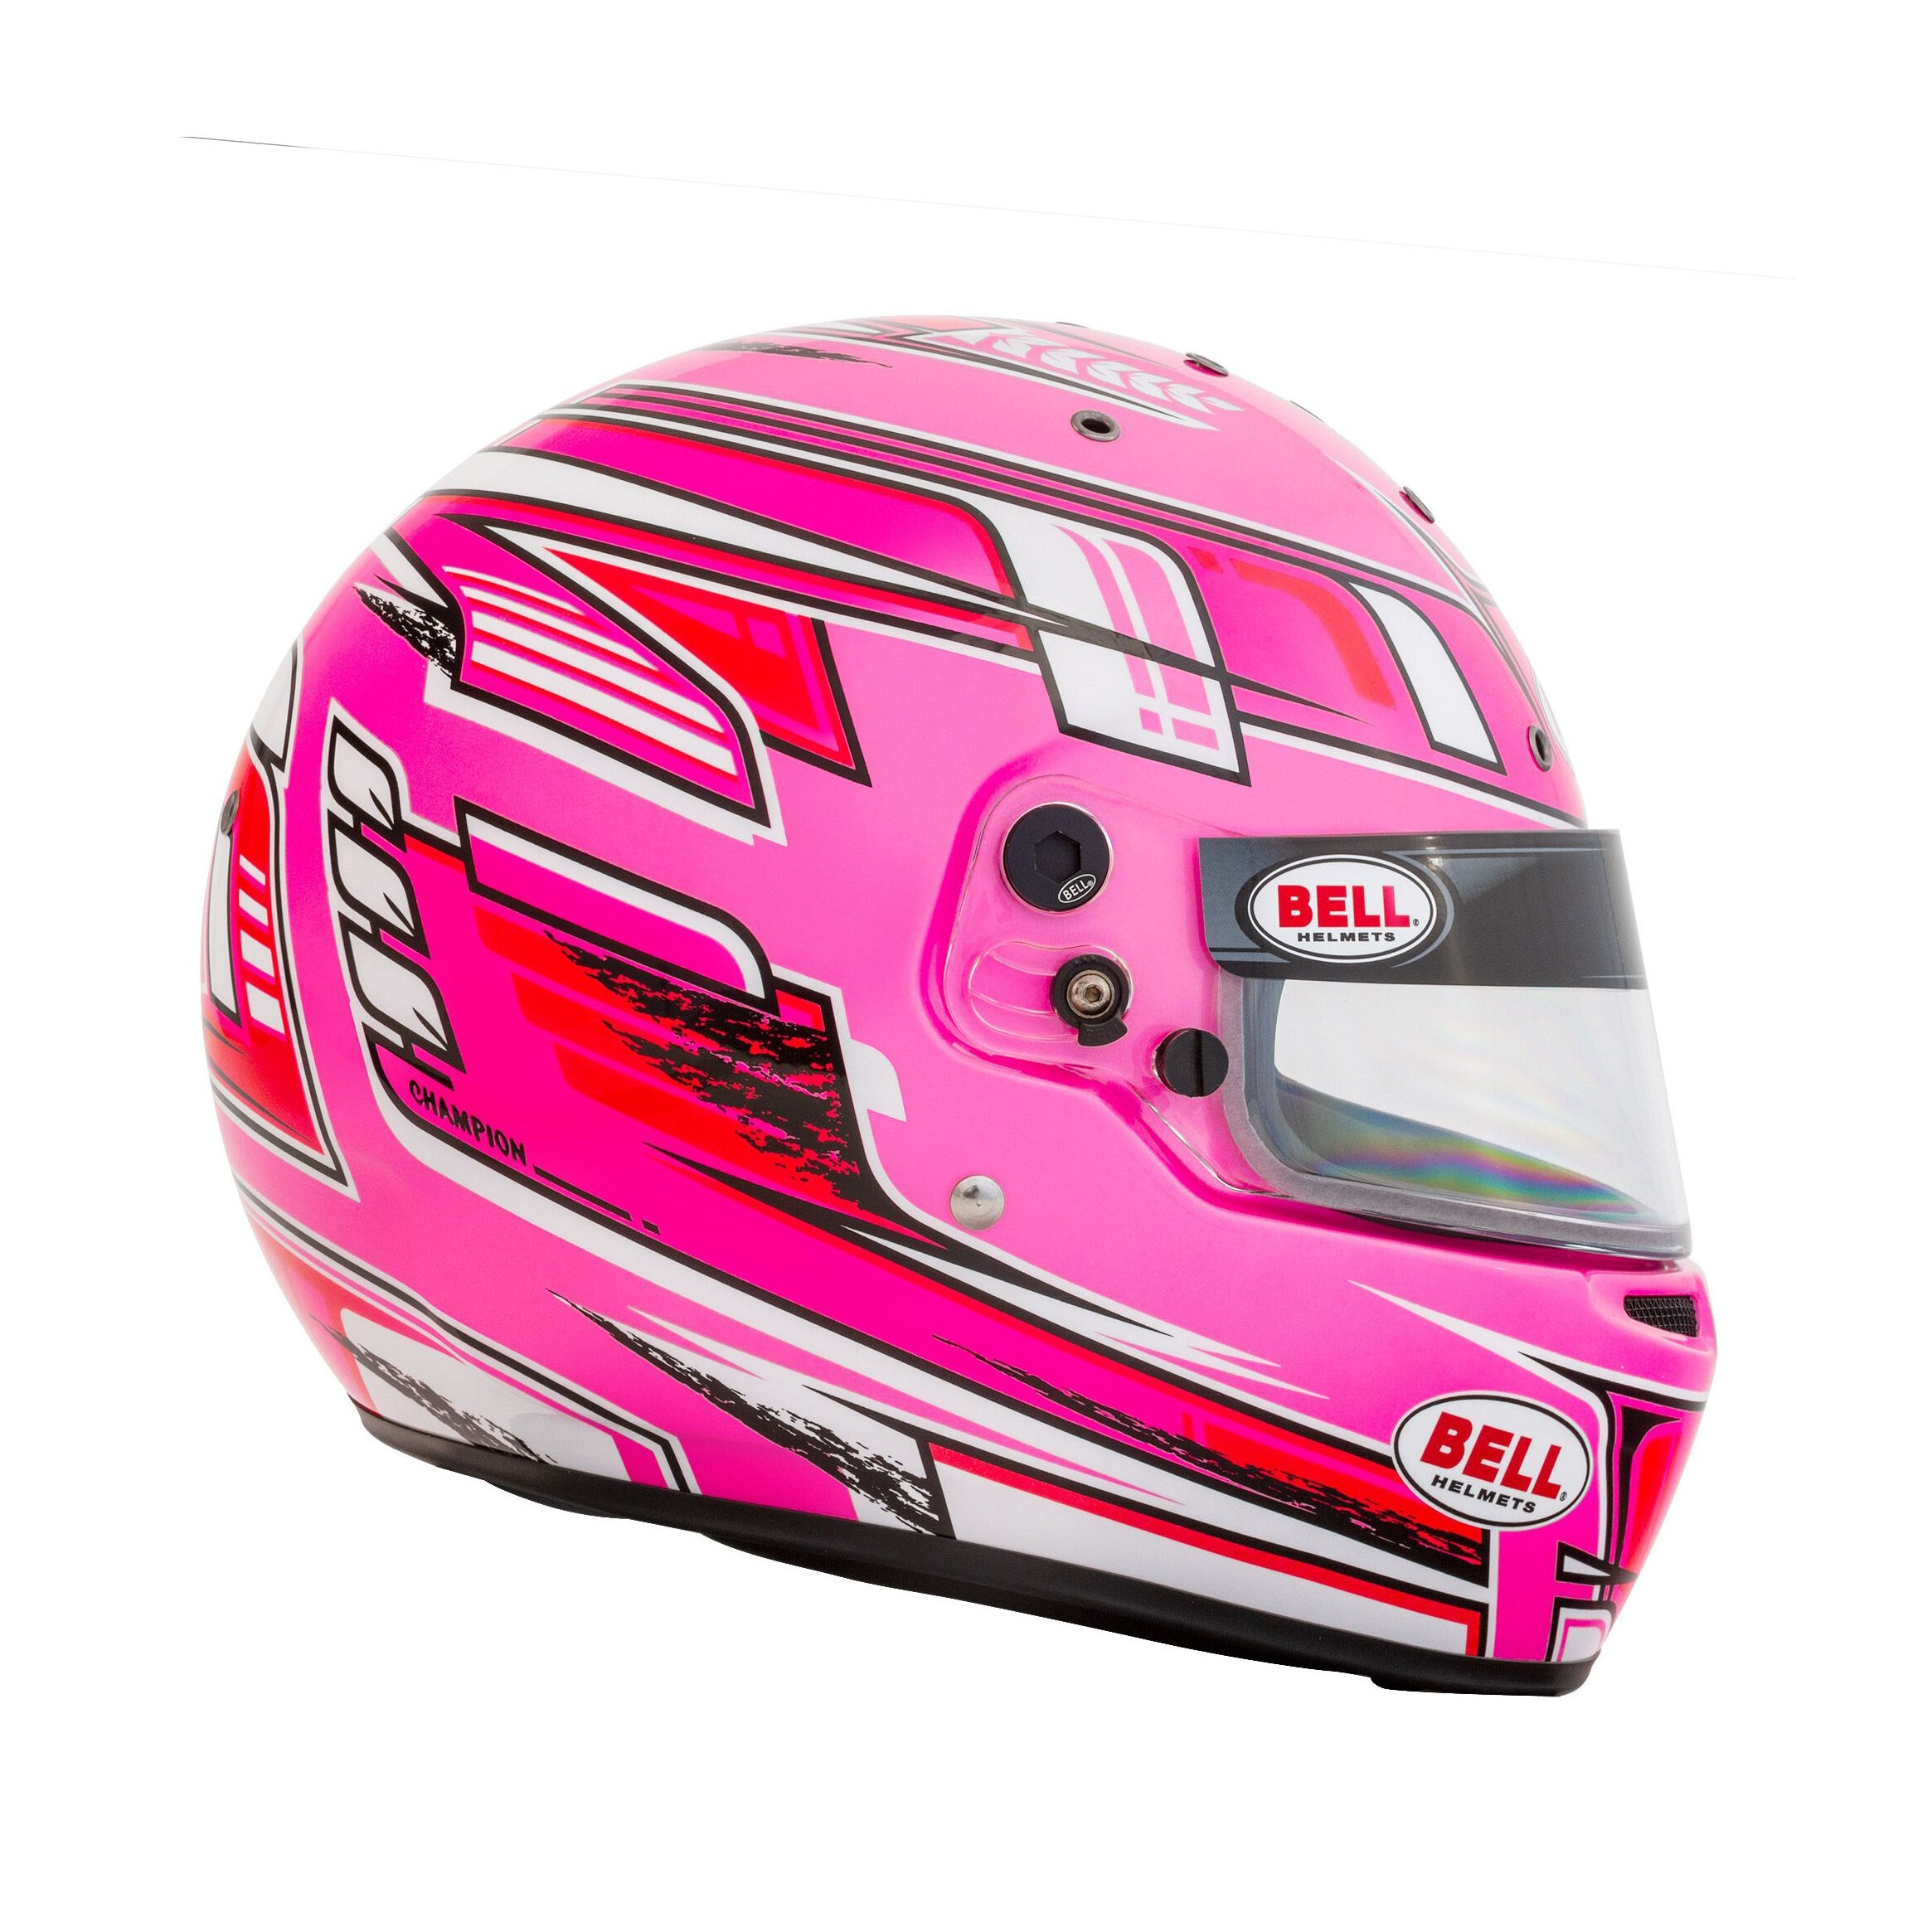 Bell KC7-CMR Snell-FIA Approved Kart Karting Race Helmet - Champion Green